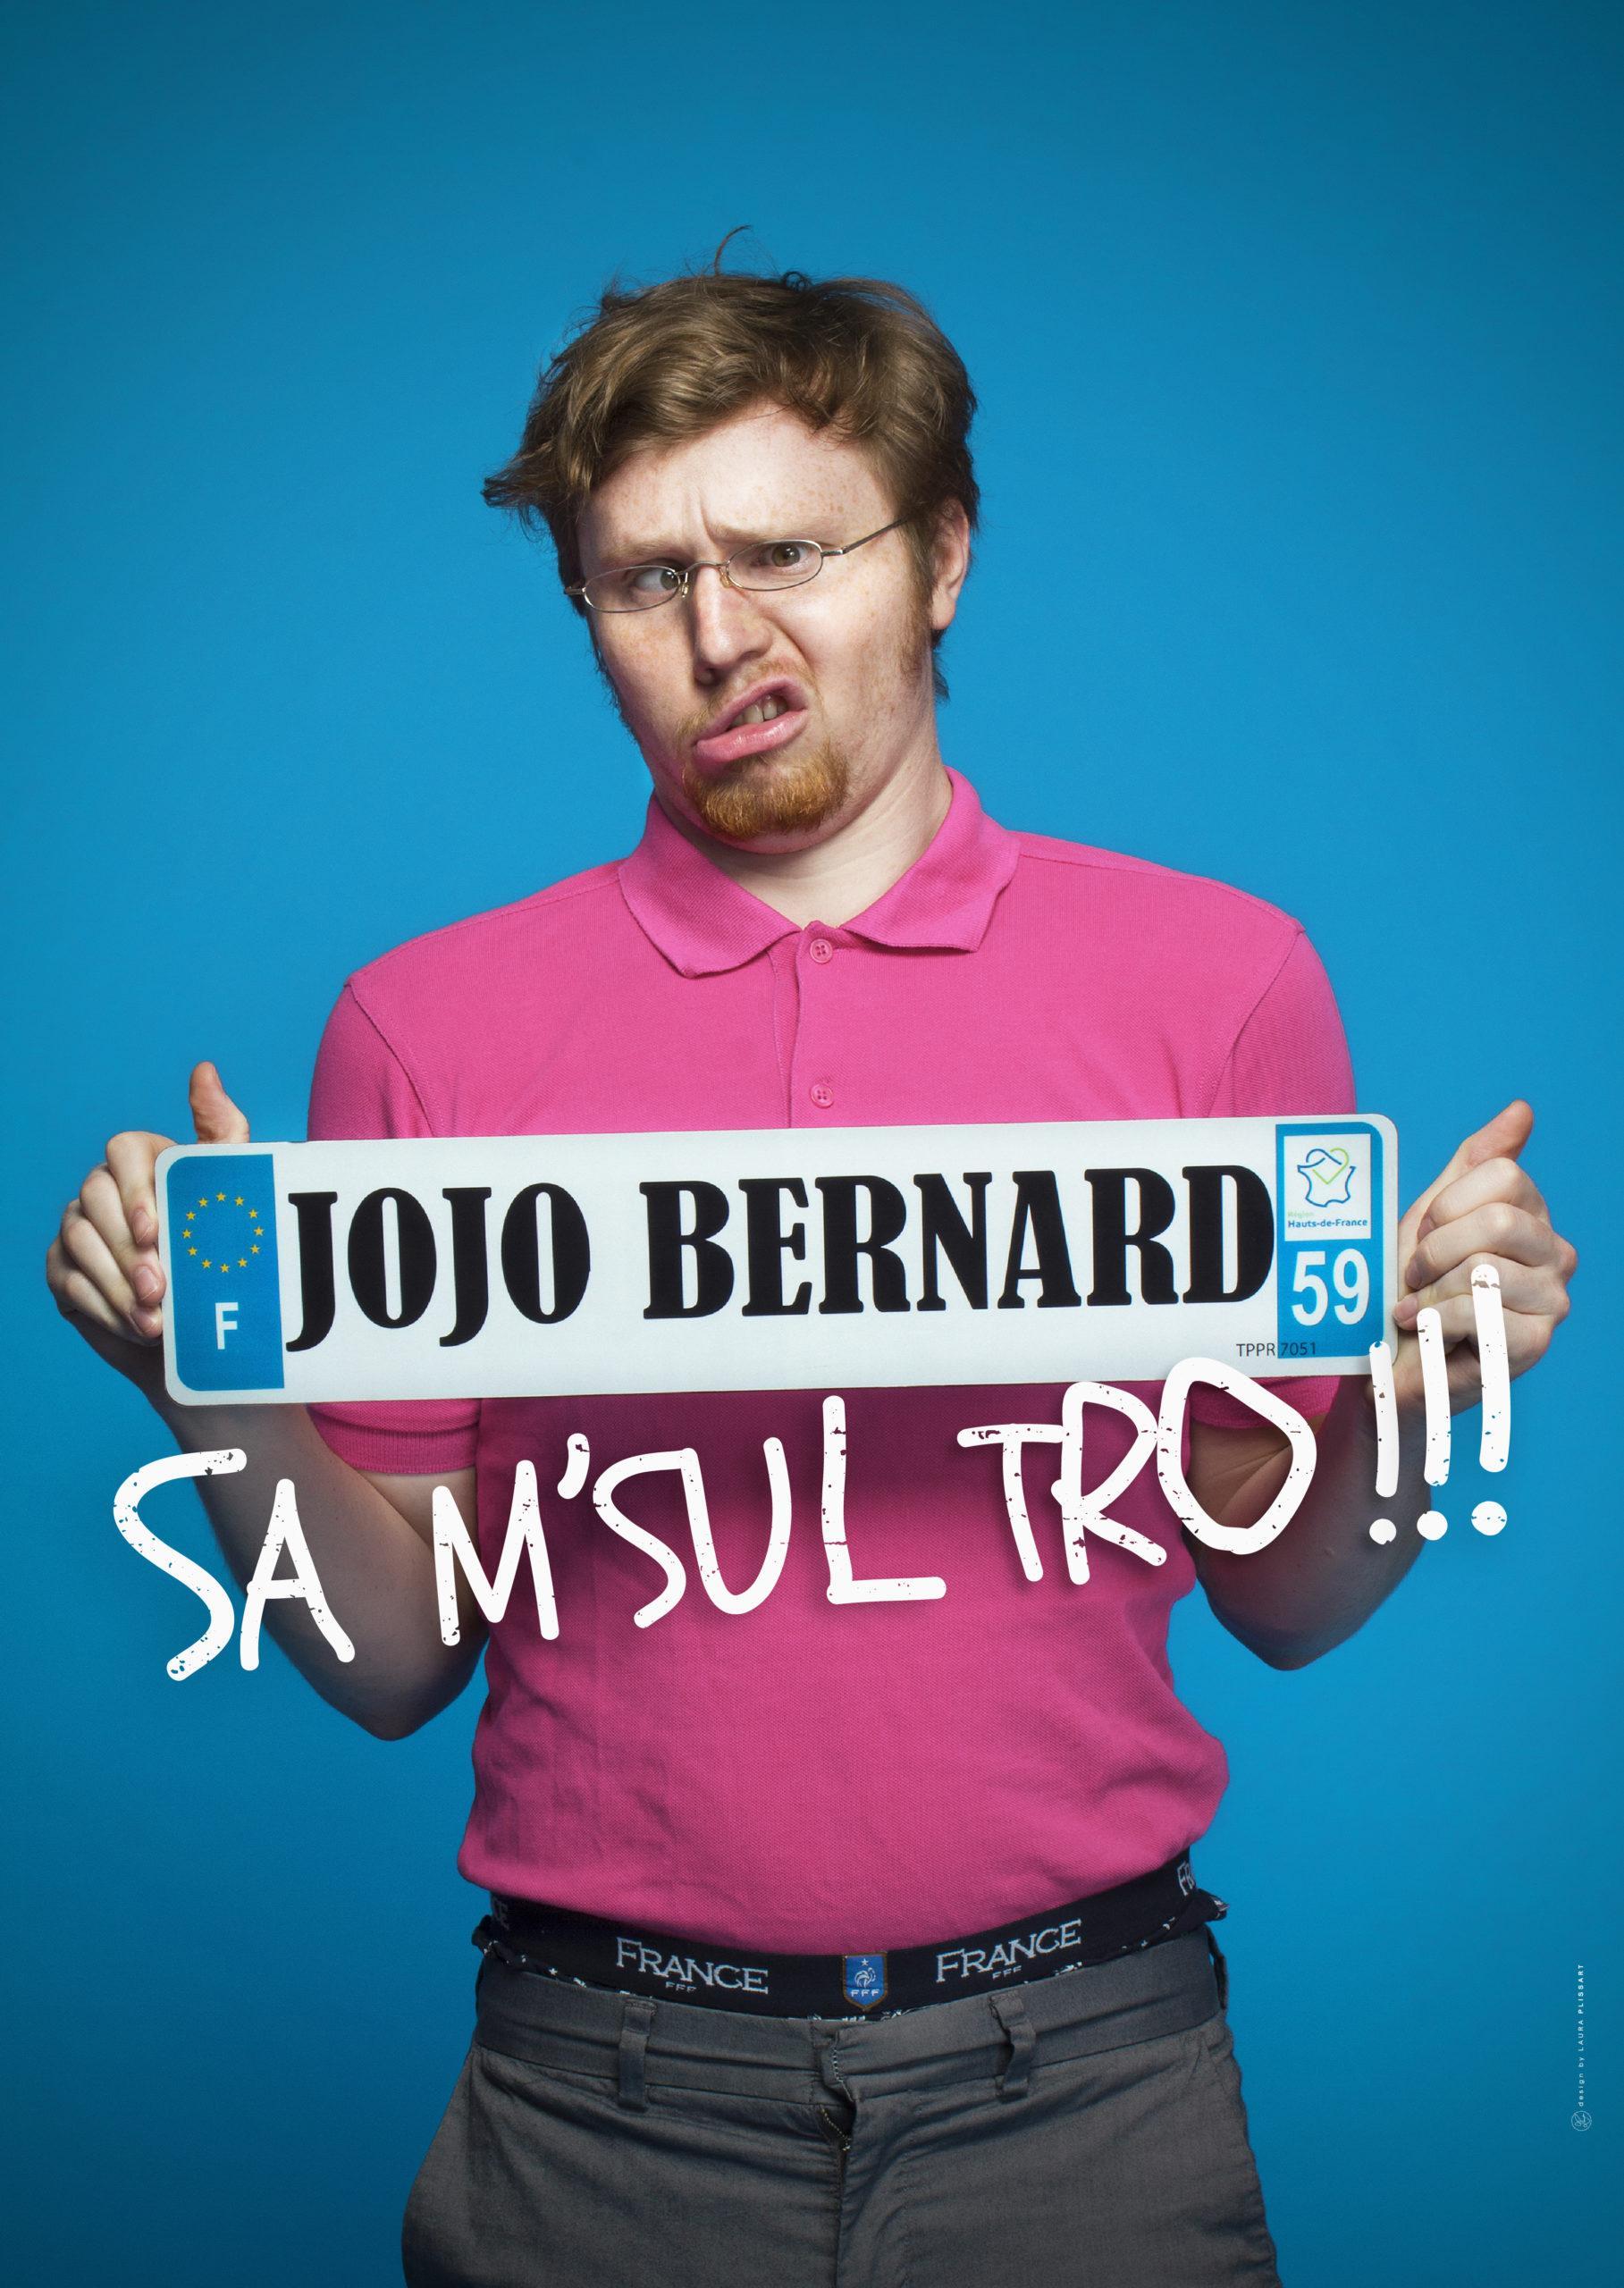 Jojo Bernard